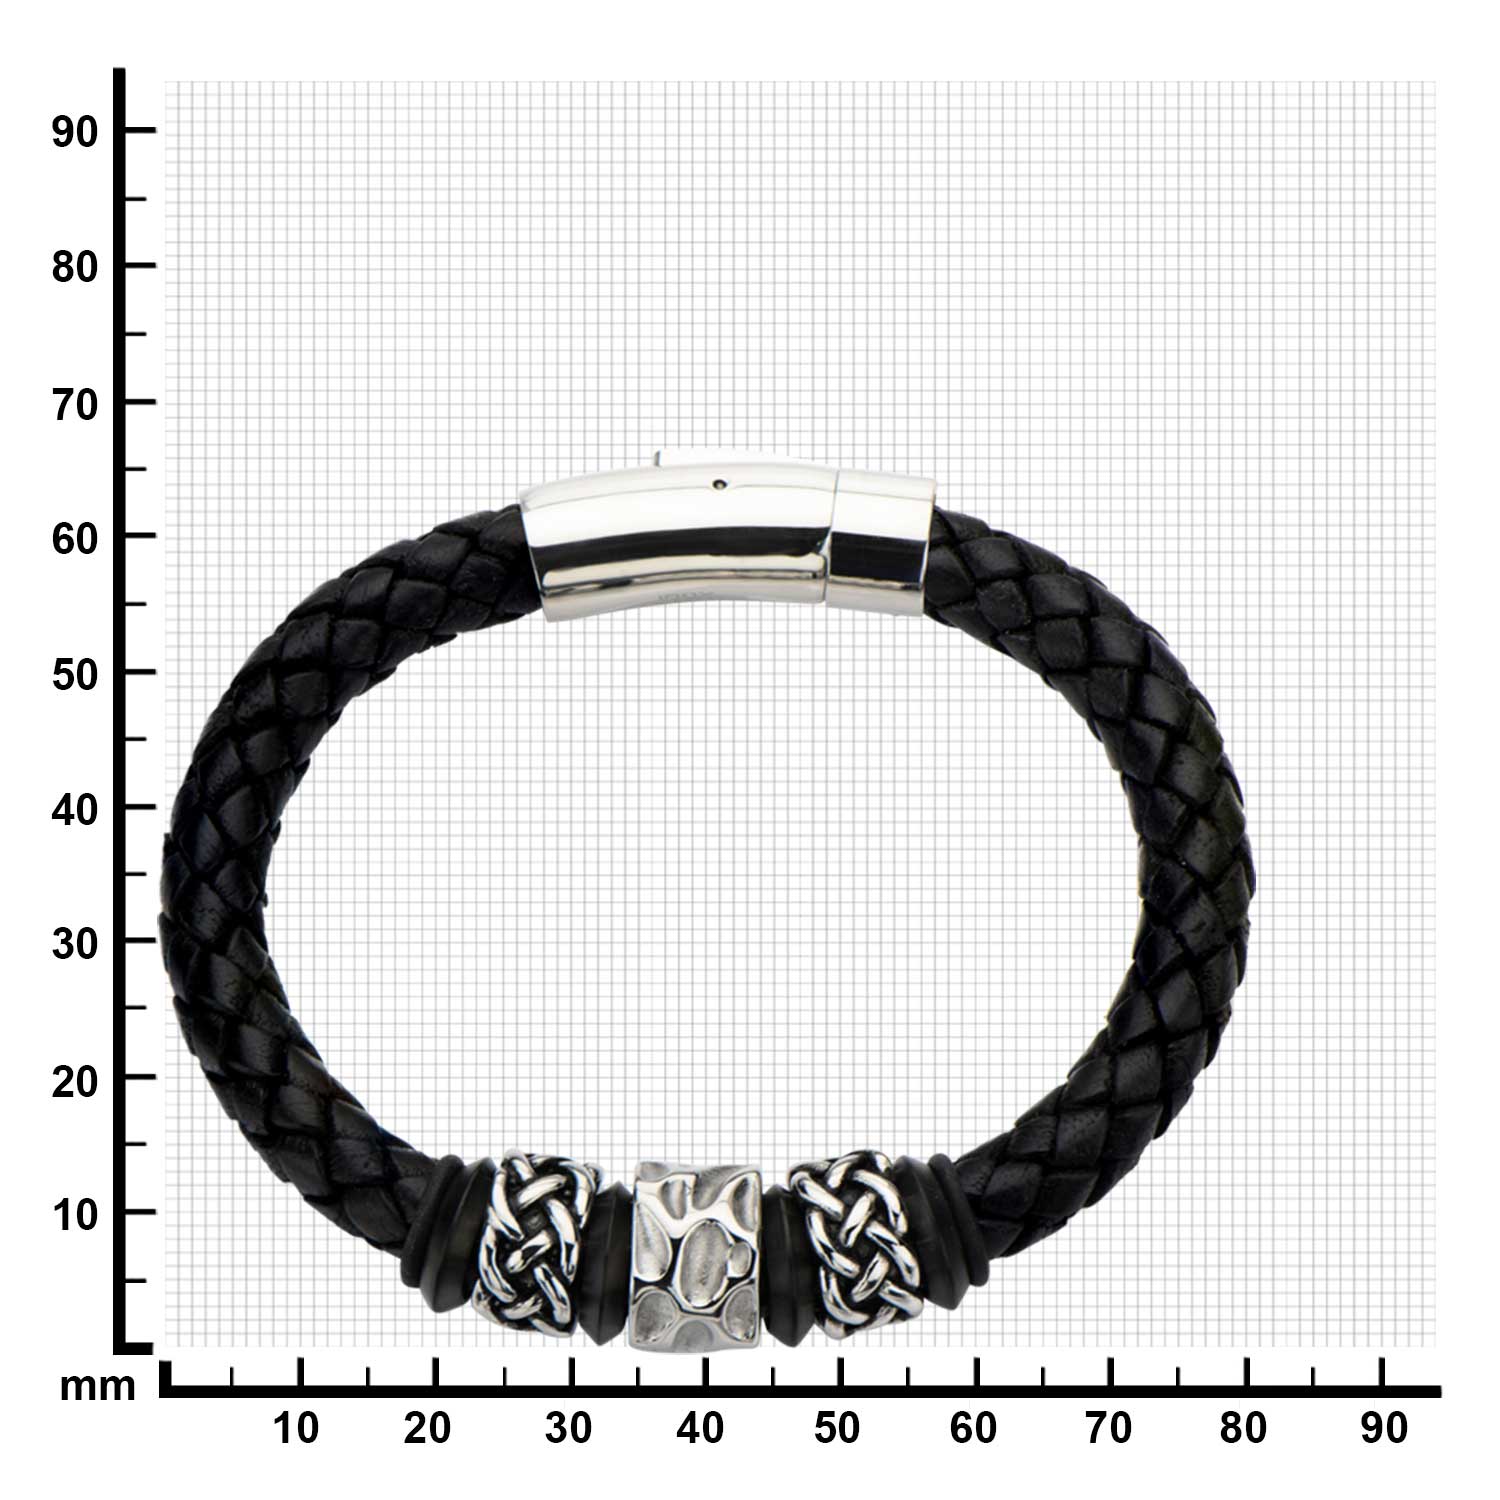 Celtic Knot Bead in Black Braided Leather Bracelet